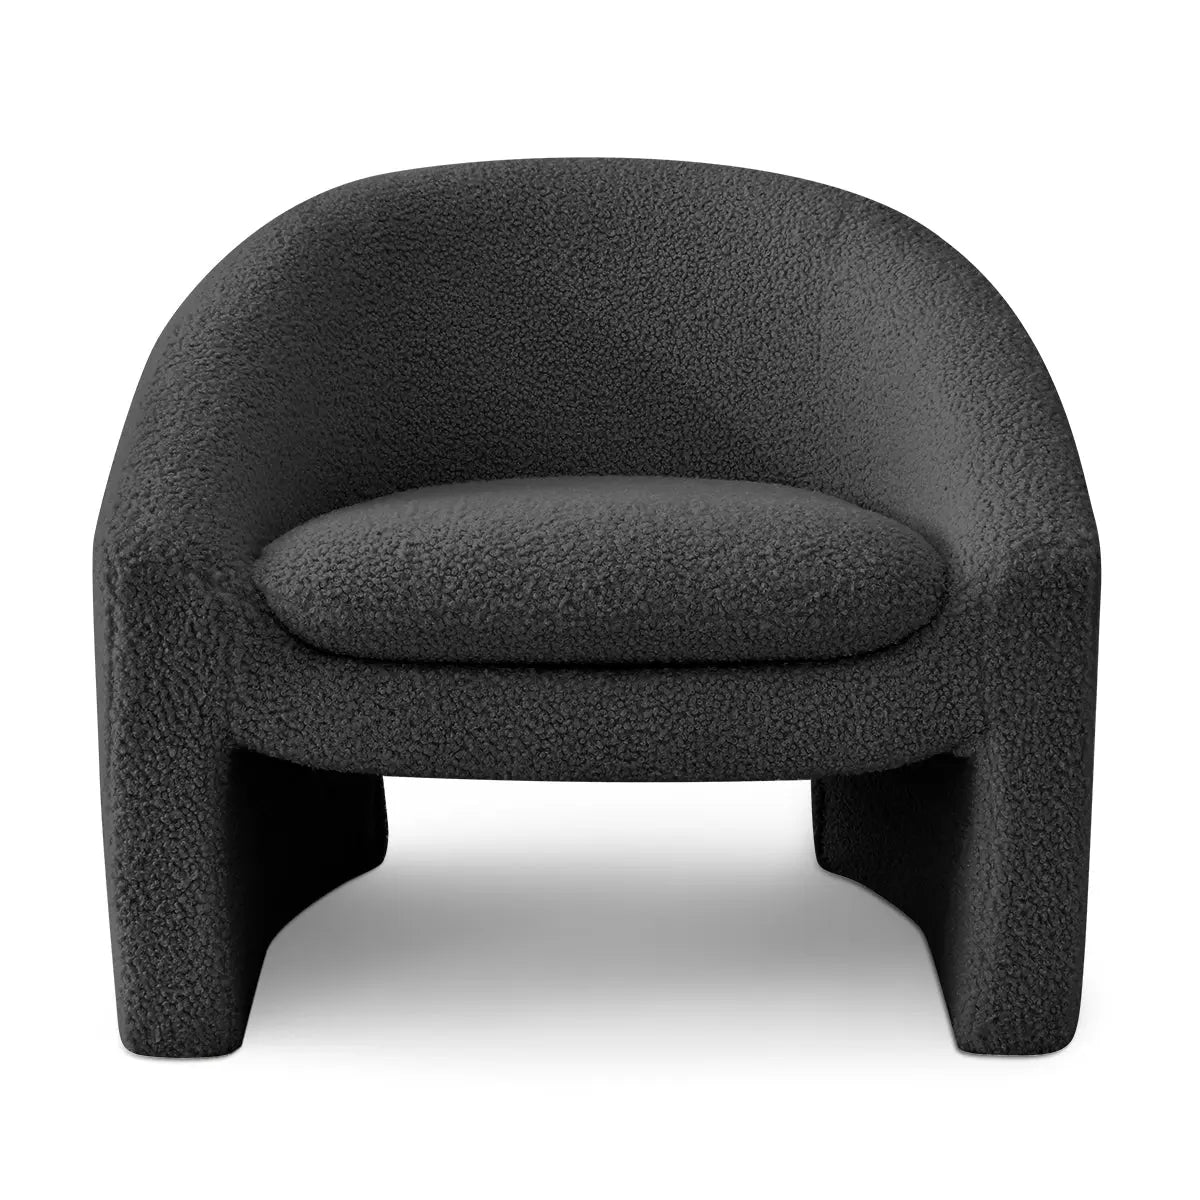 Kiki 32" Modern Accent Chair